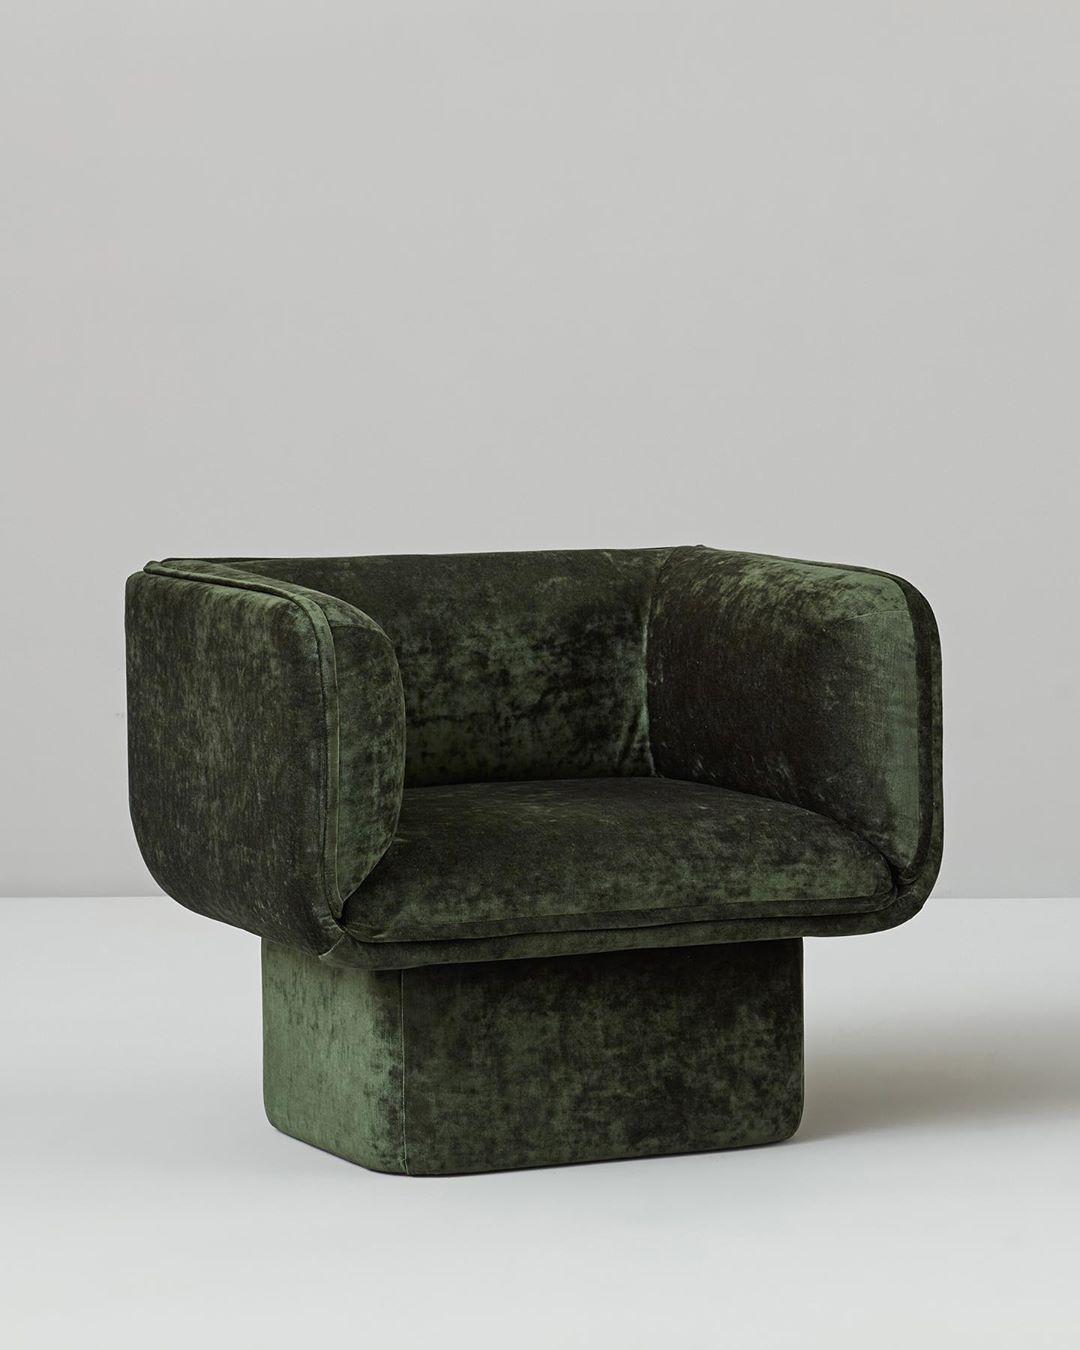 Spanish Block Armchair by Studio Mut